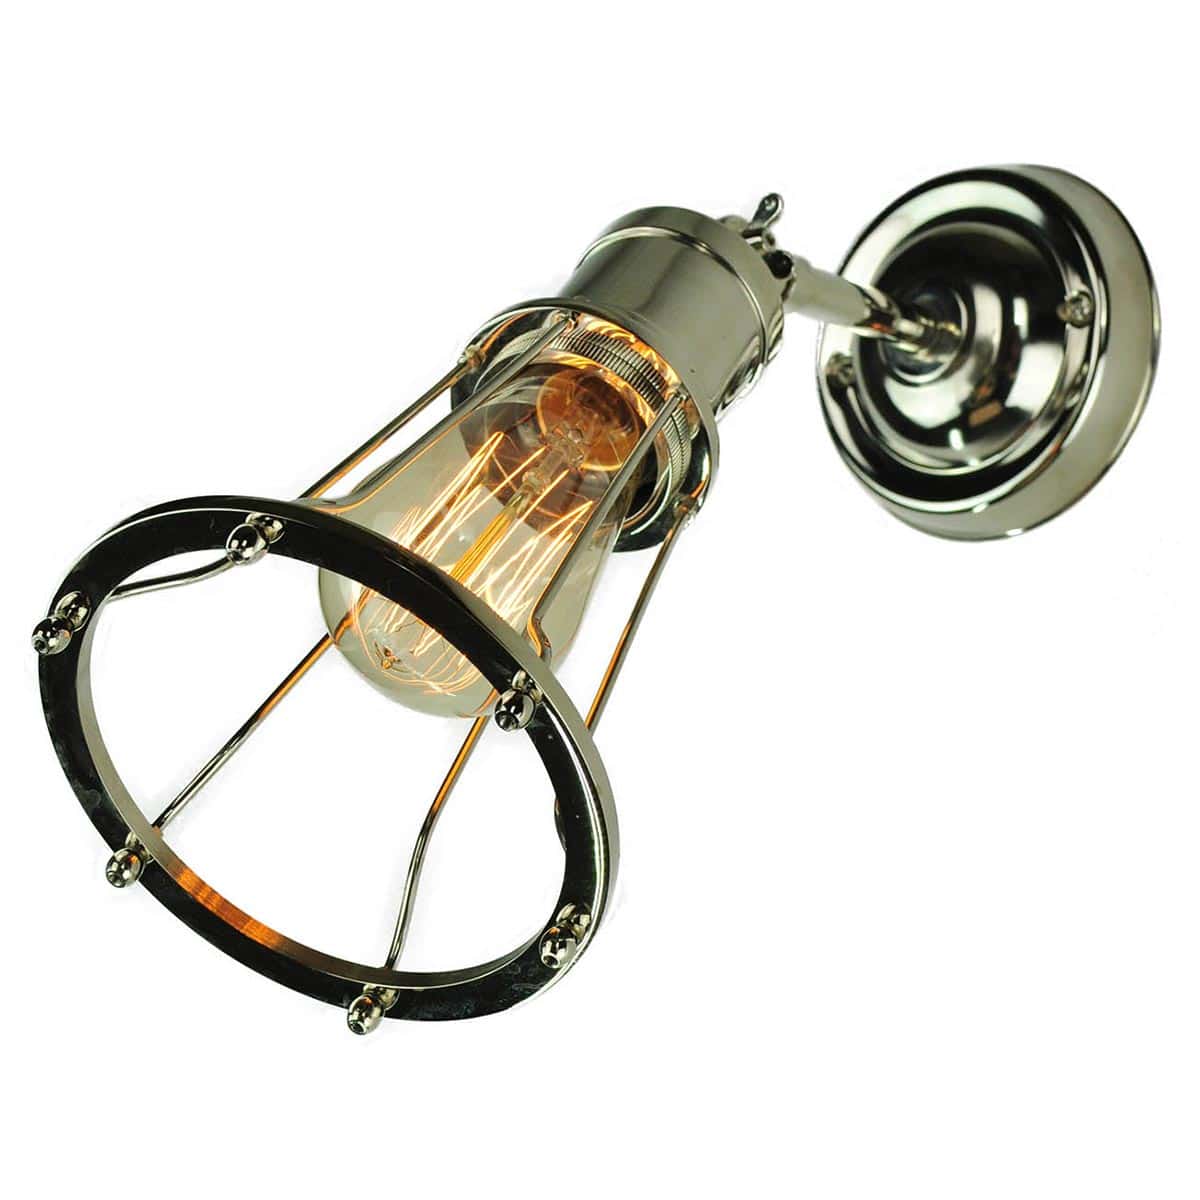 Marconi Industrial 1 Lamp Adjustable Wall Light Polished Nickel